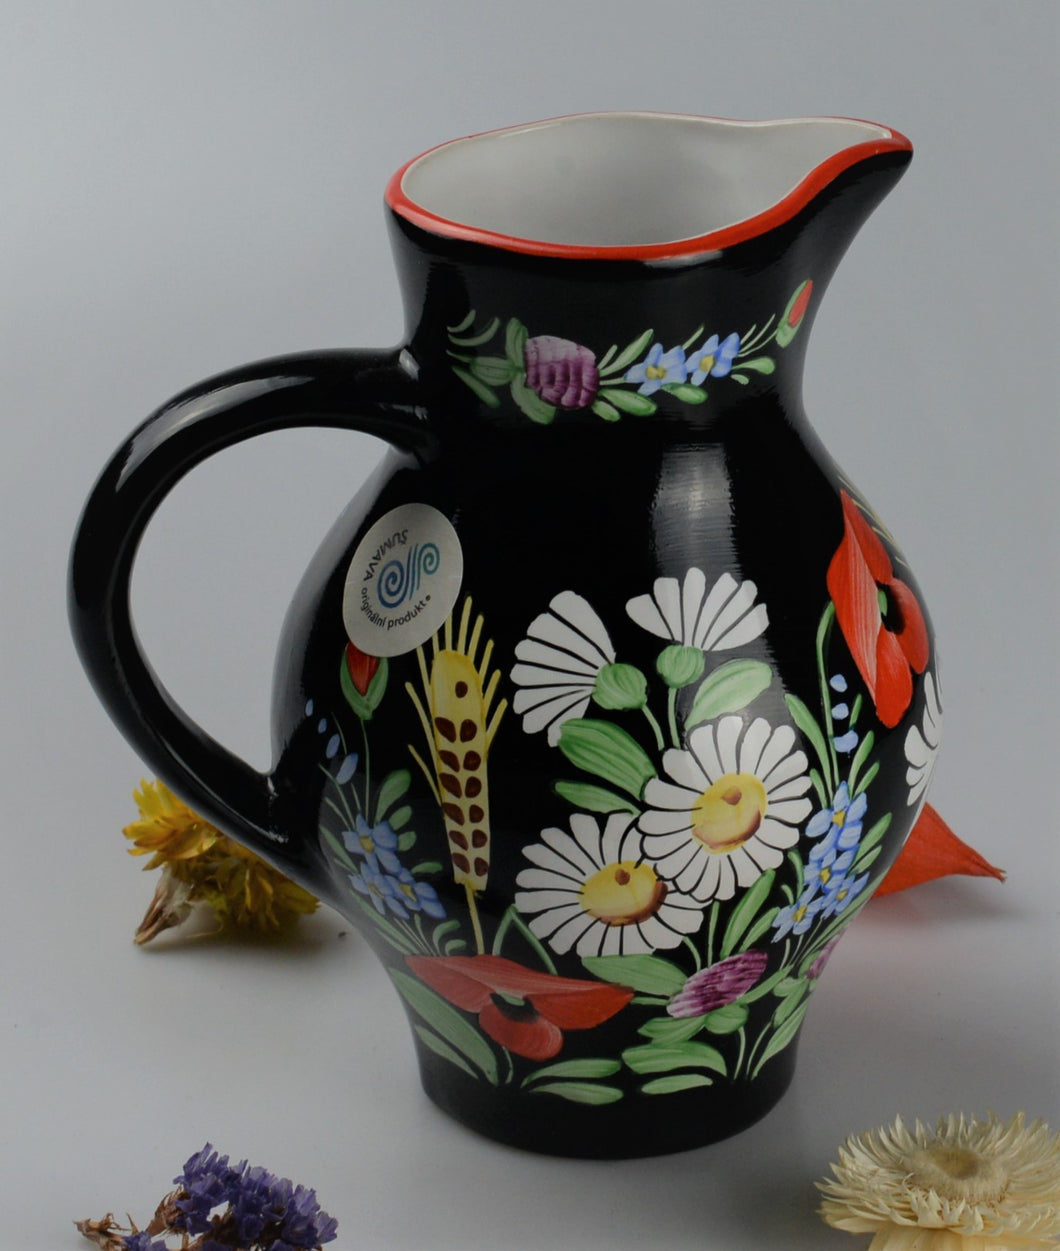 Medium jug from traditionnal czech ceramic - black